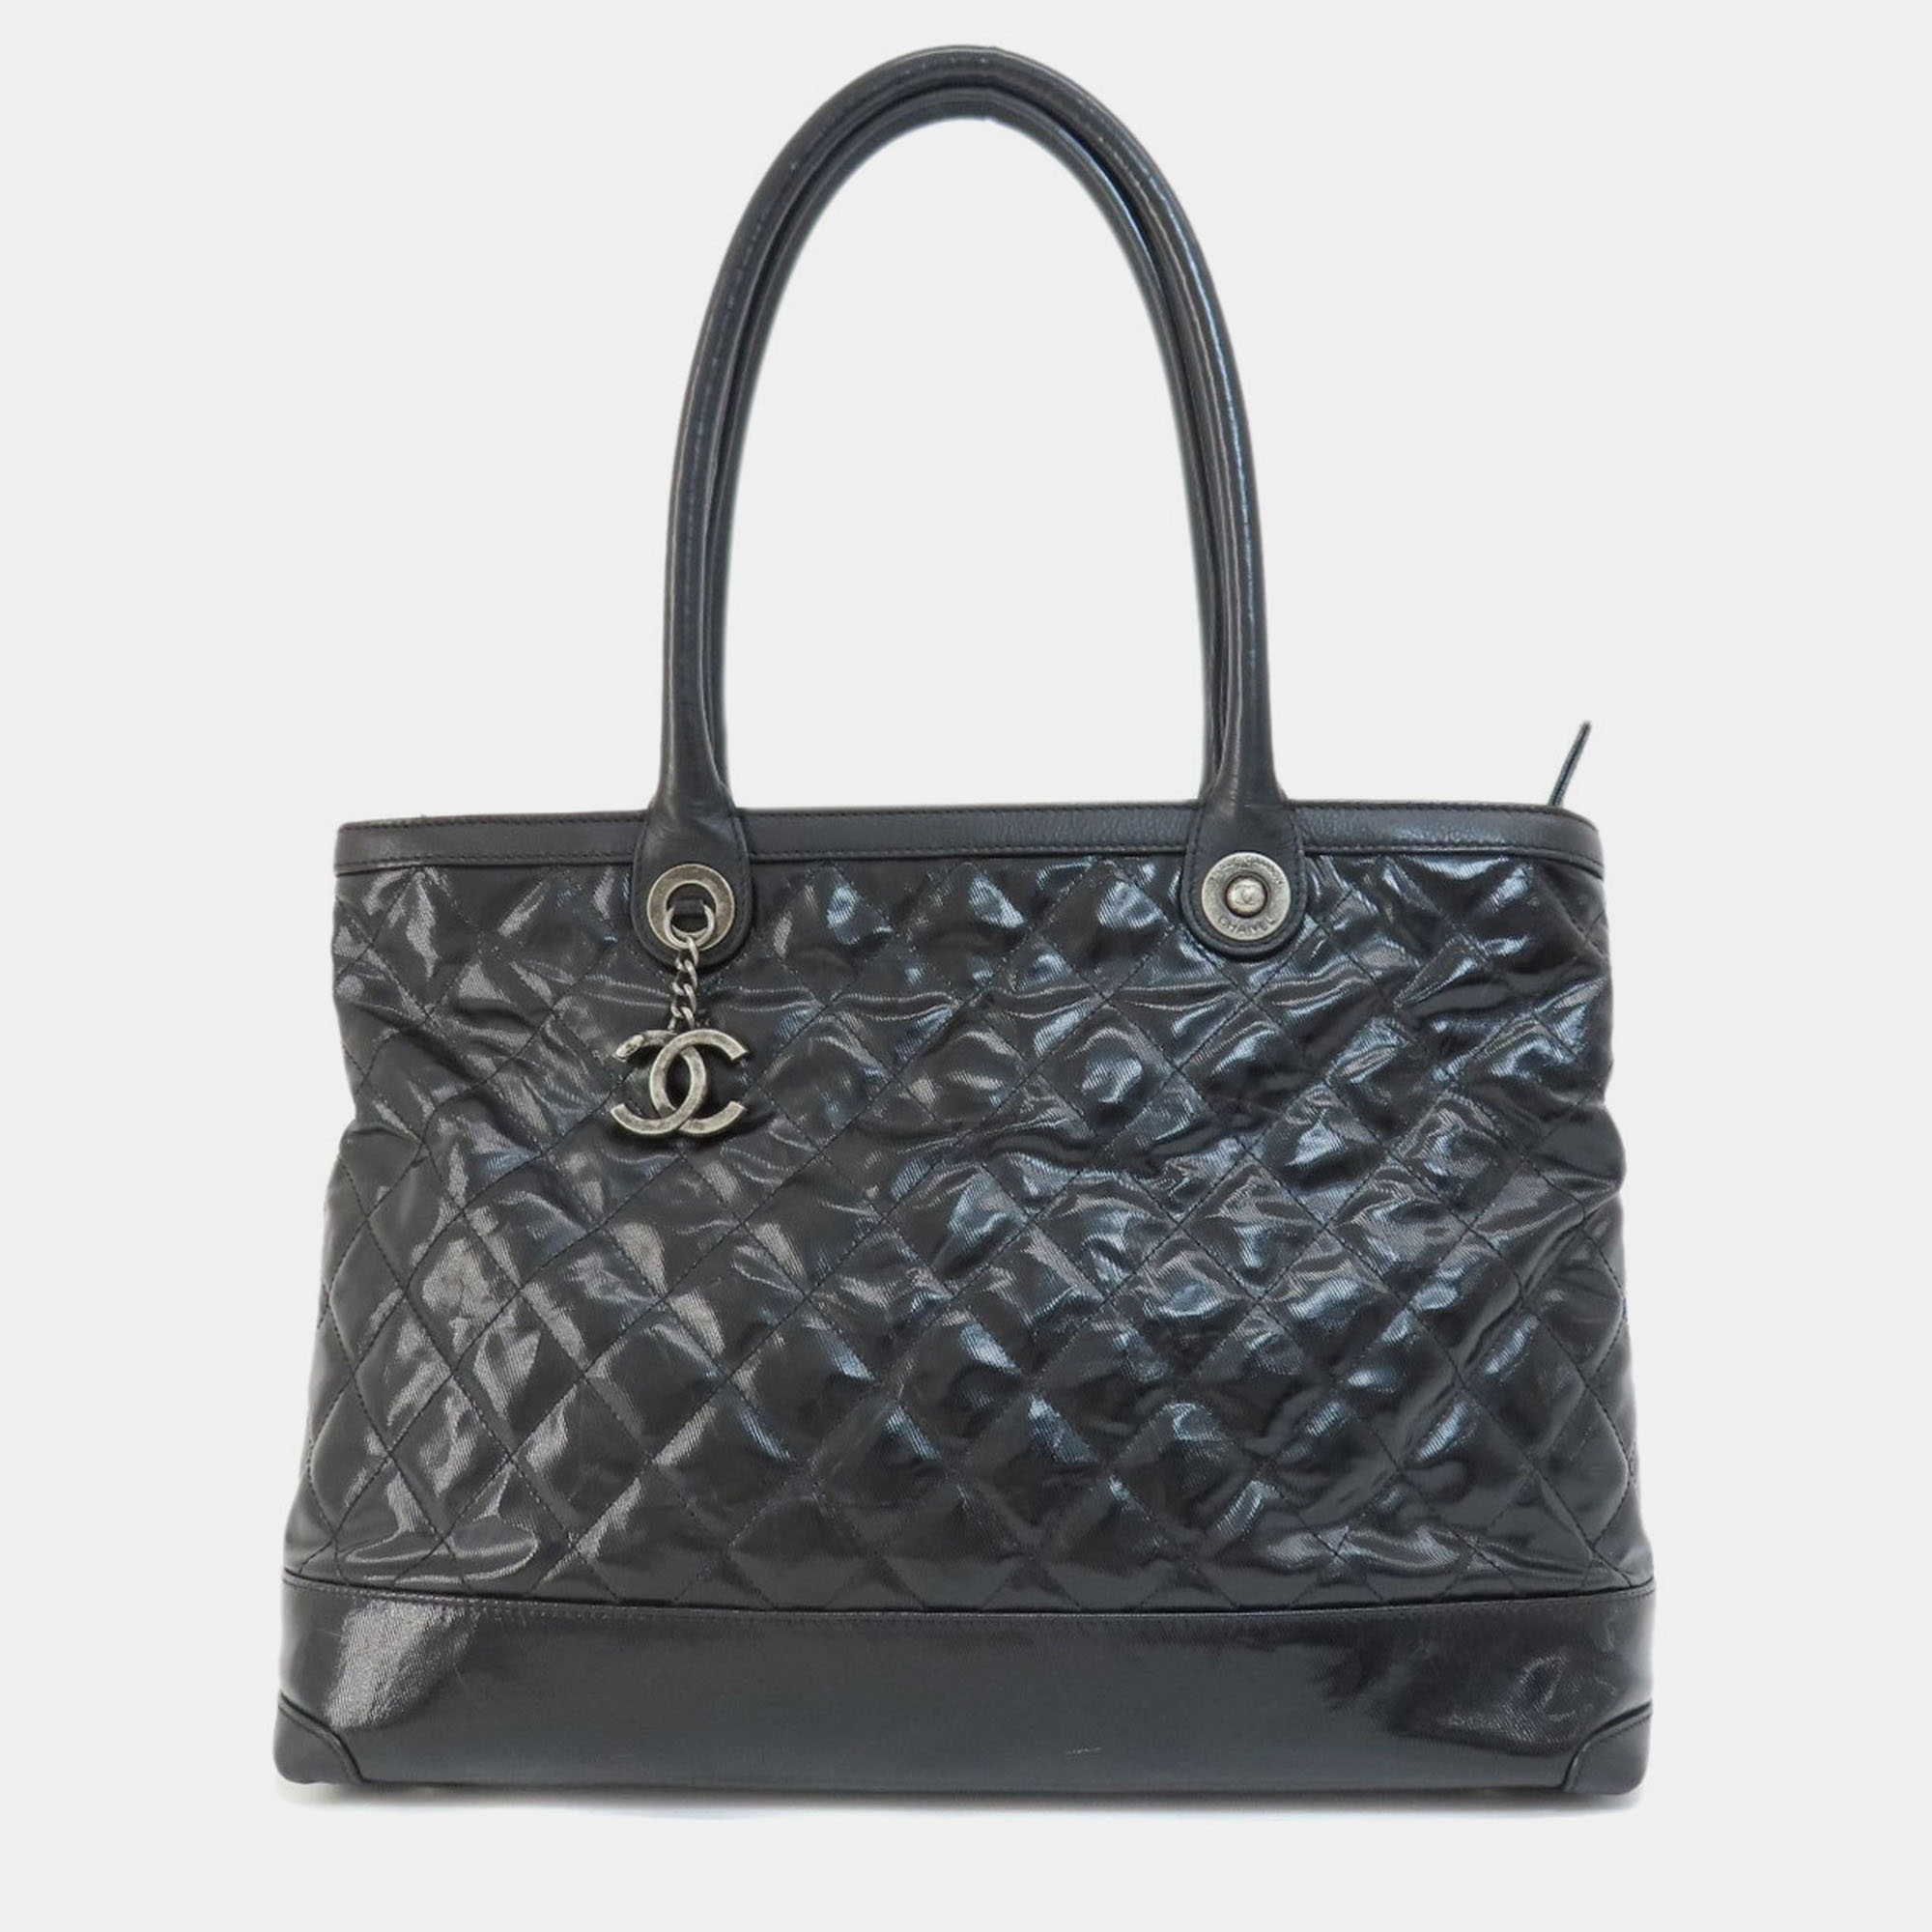 

Chanel Black Patent Leather CC Tote Bag